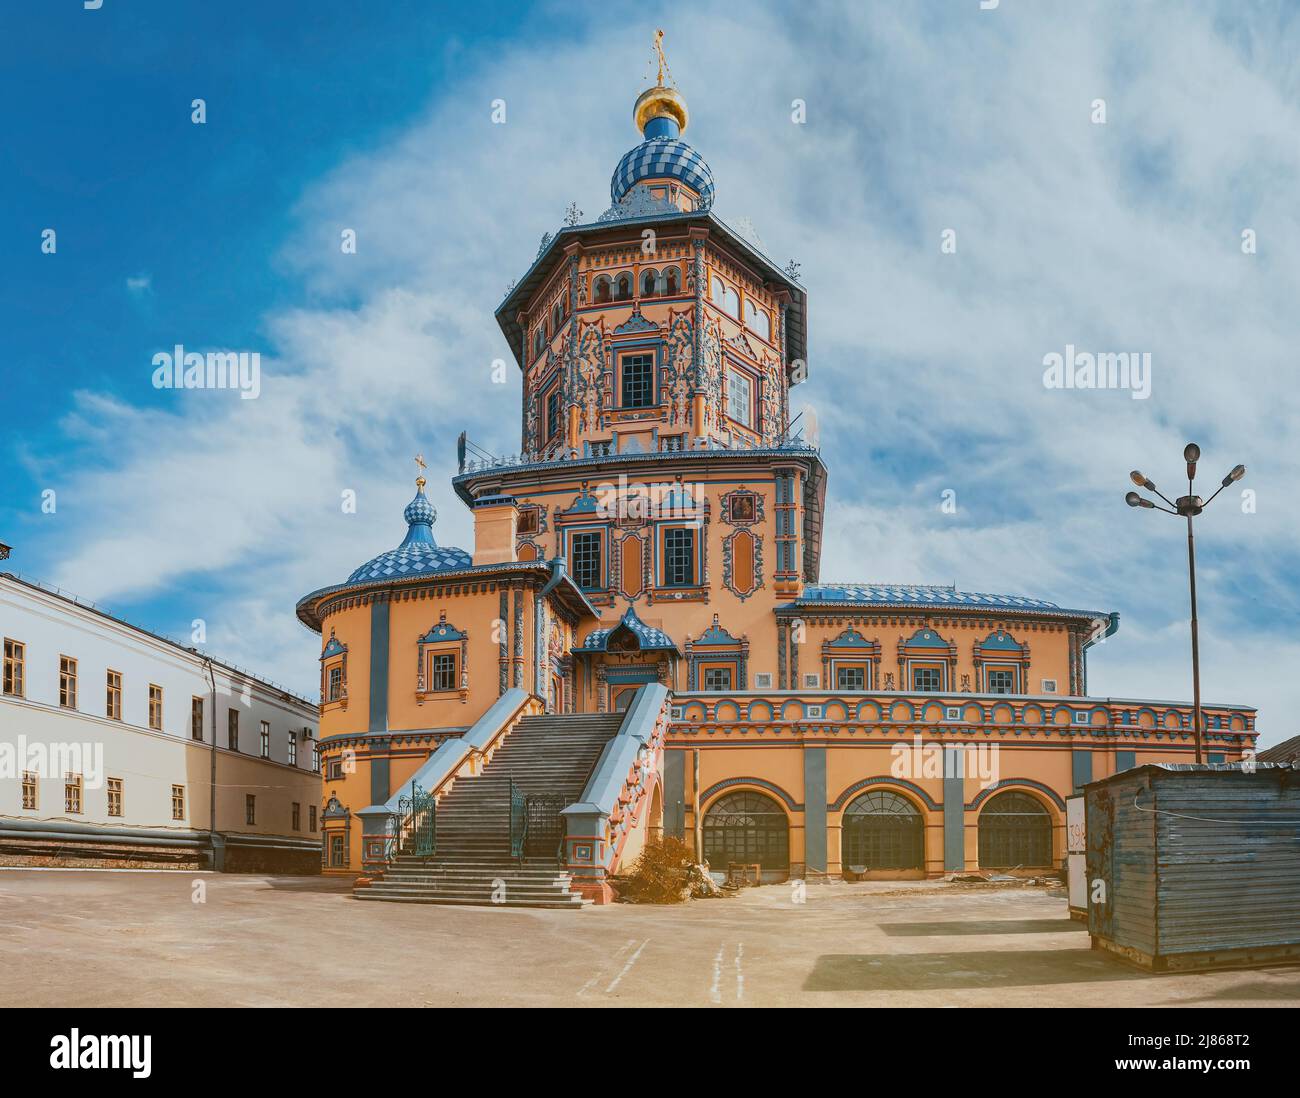 Saints Peter and Paul Cathedral or Petropavlovsky Cathedral. Kazan, Tatarstan Republic, Russia. Orthodox church in baroque style. Kazan architectural landmark Stock Photo